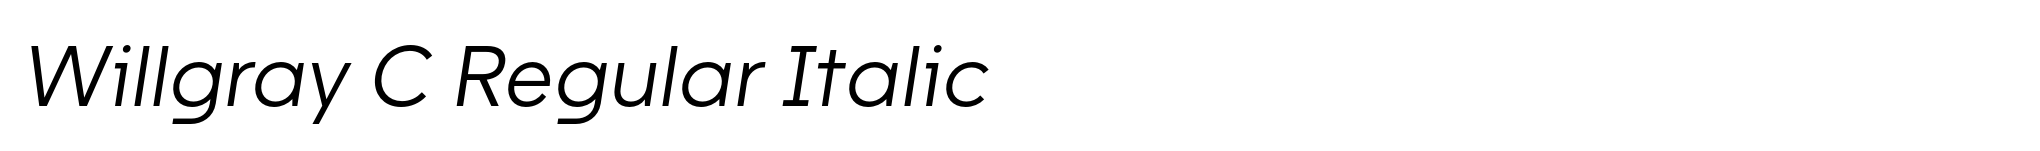 Willgray C Regular Italic image